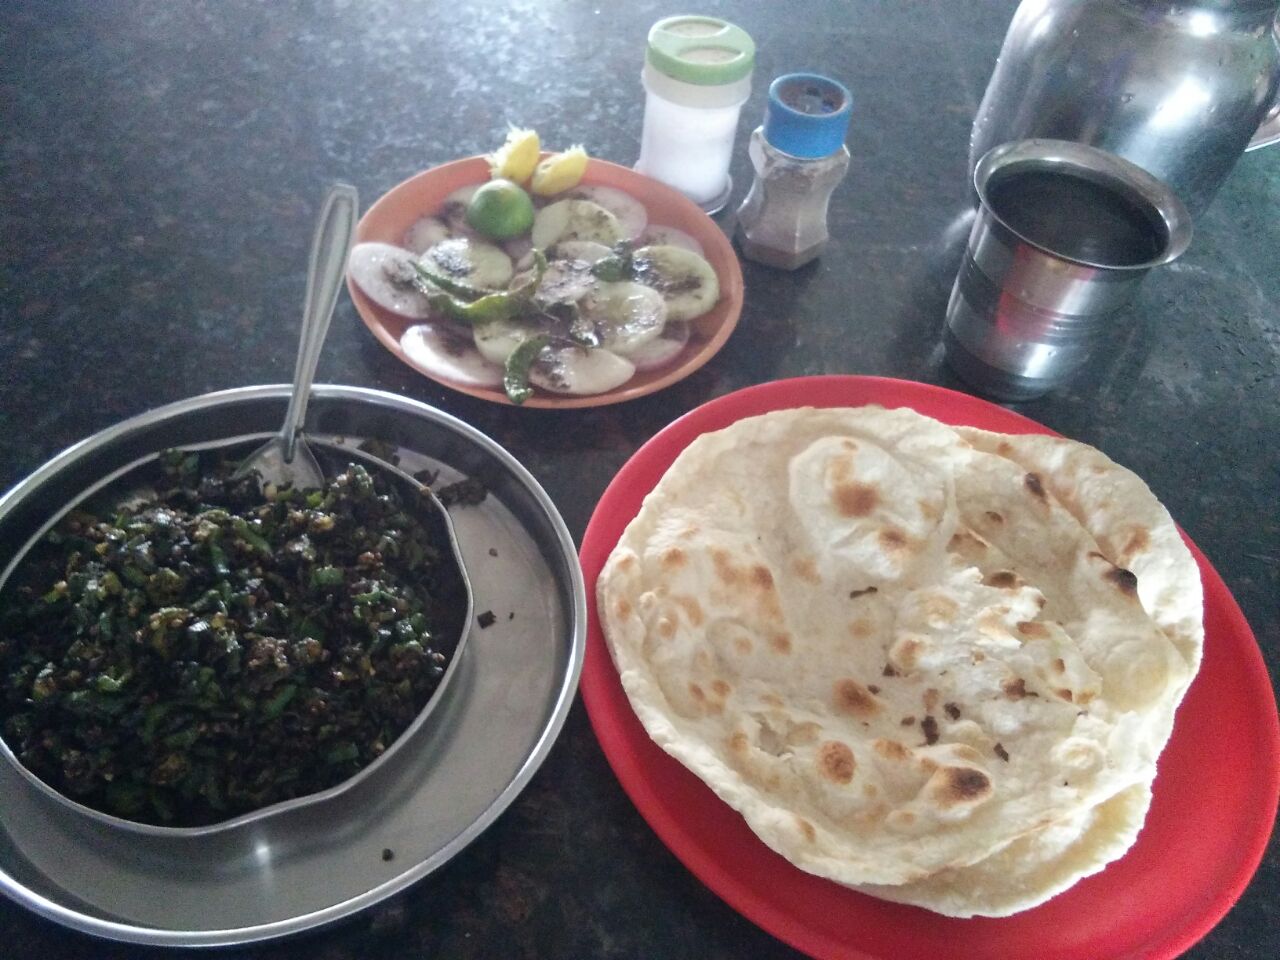 Sunitas favourite-Bhindi Ki sabji for lunch